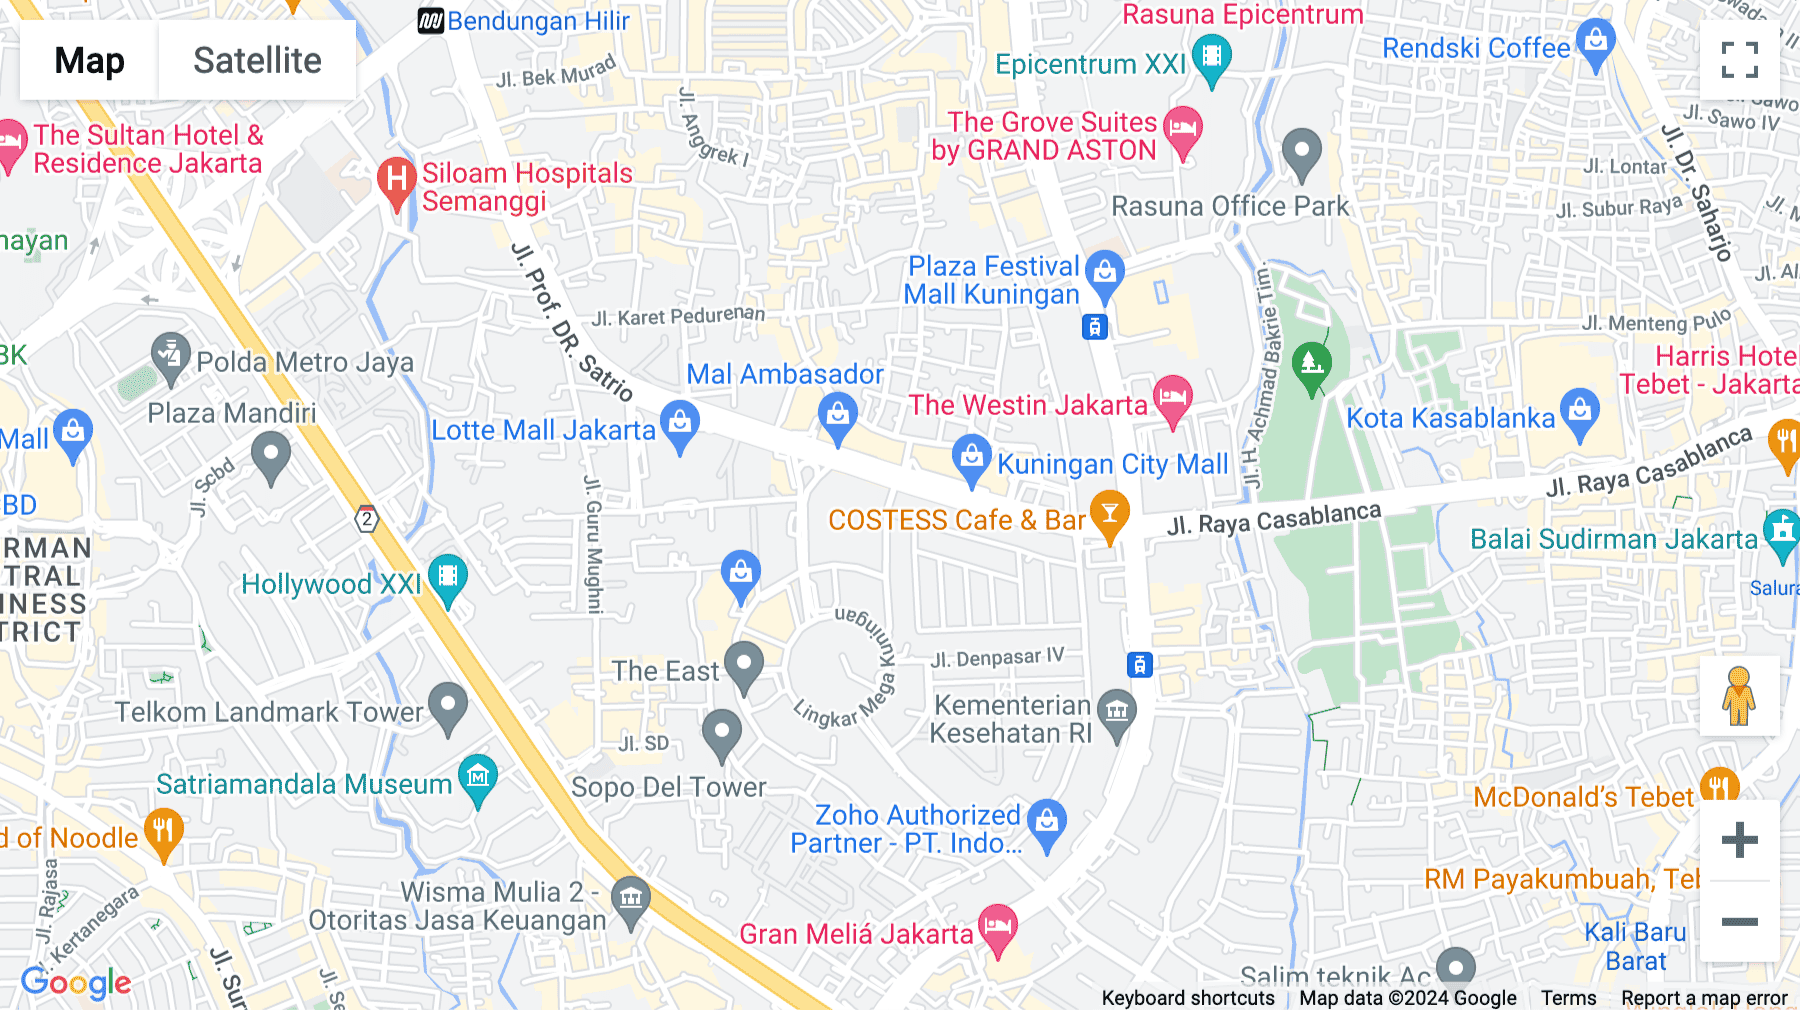 Click for interative map of Jalan Professor Doktor Satrio Blok C4 No.5, RT.7/RW.2, Kuningan Timur, Kecamatan Setiabudi, Kuningan, Jakarta